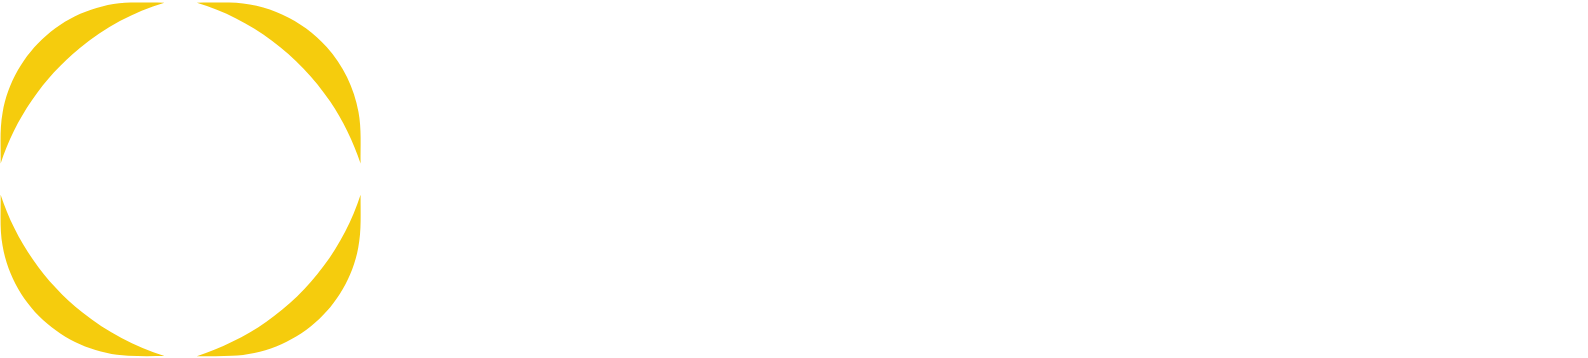 Privia Health Group logo large for dark backgrounds (transparent PNG)